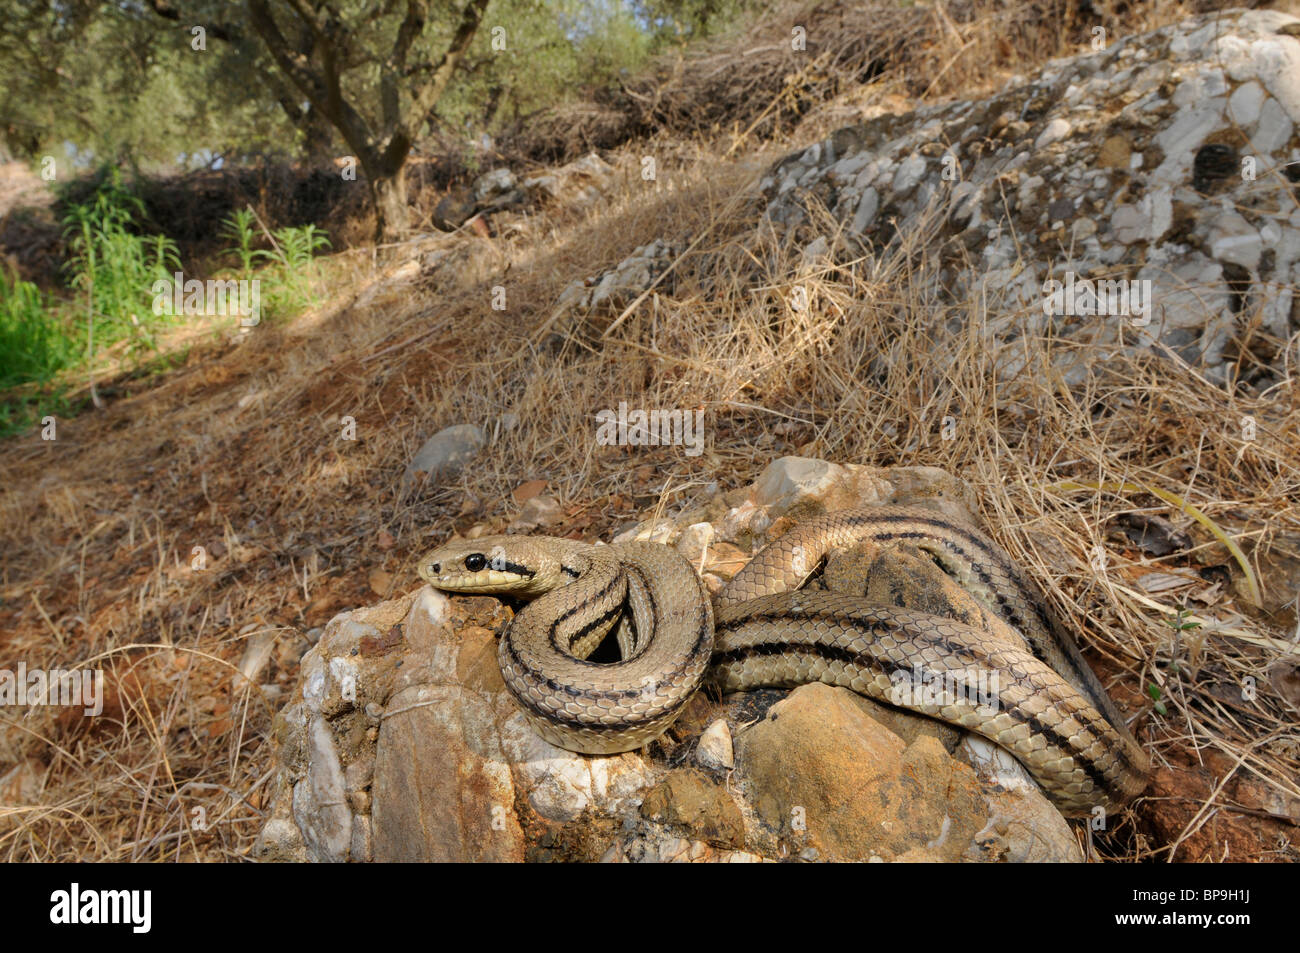 four-lined snake, yellow rat snake (Elaphe quatuorlineata), lys on a stone, Greece, Peloponnes, Messinien Stock Photo